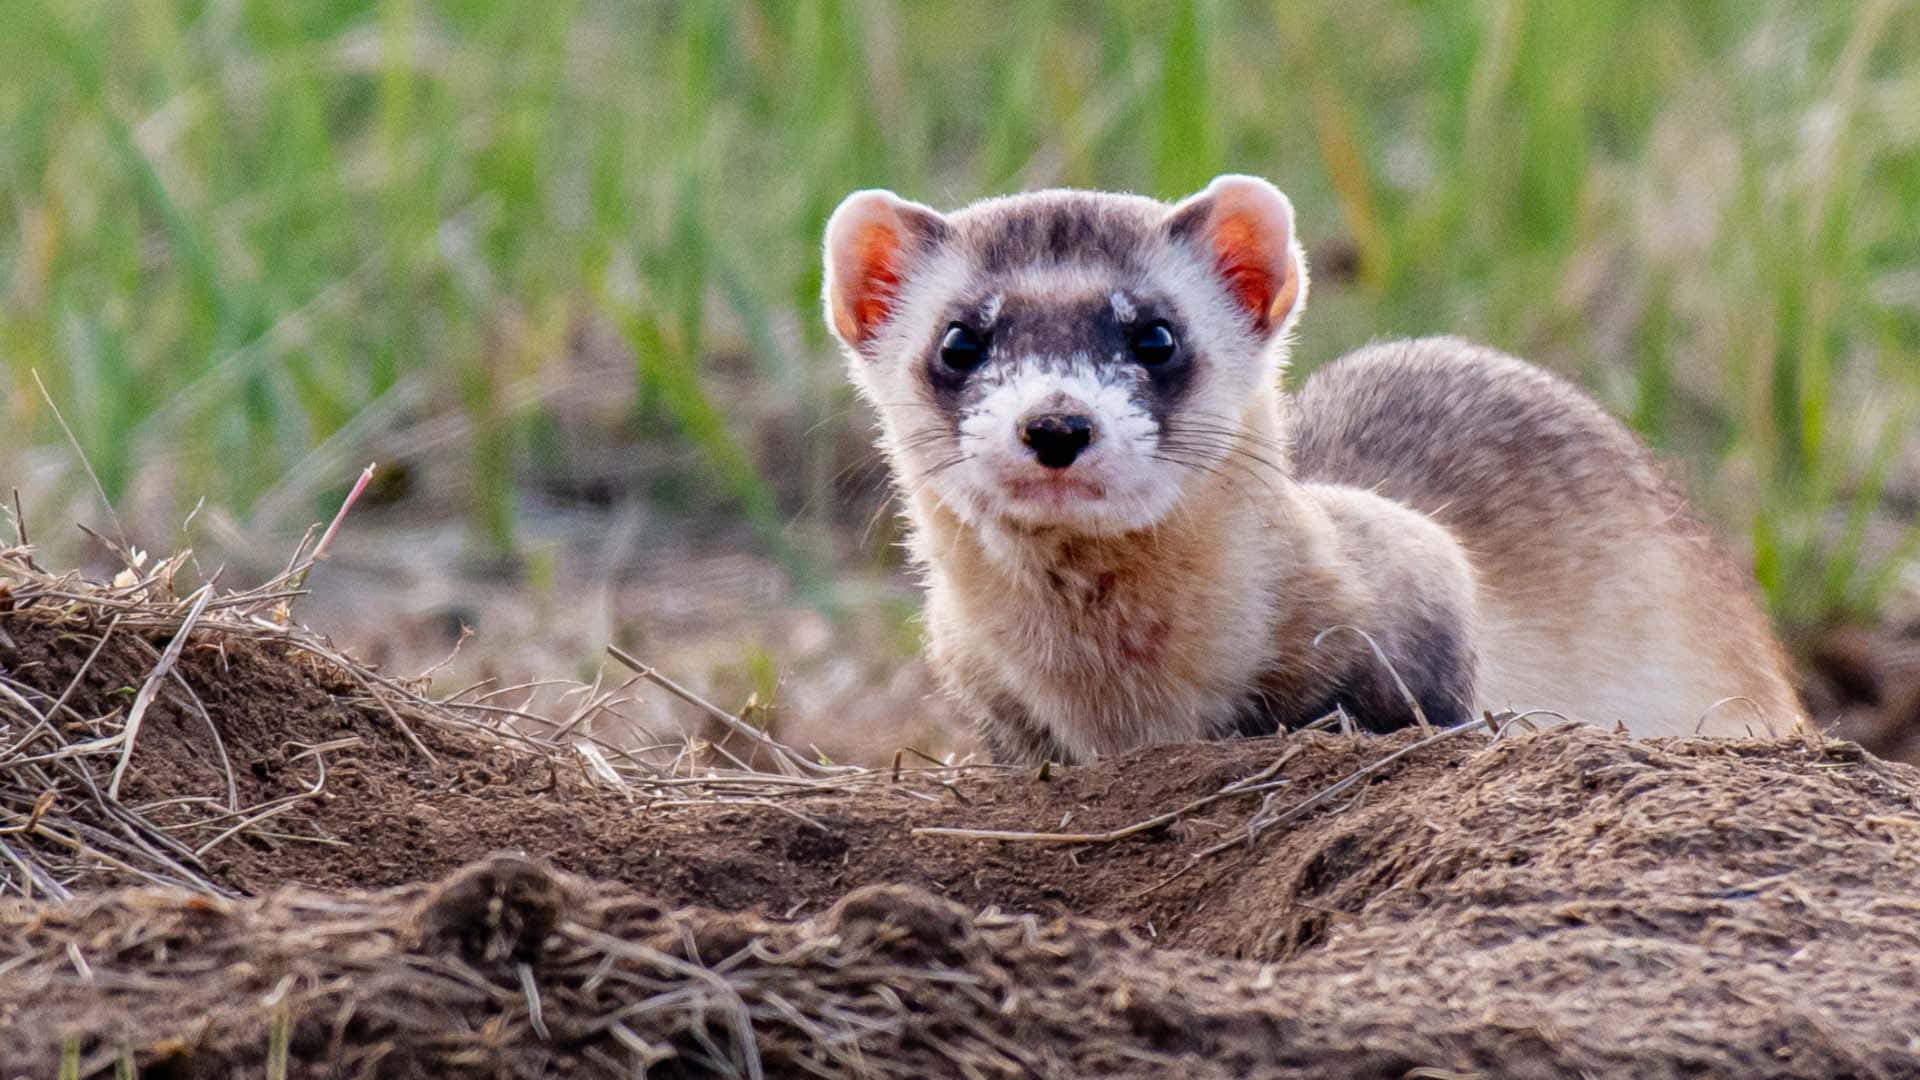 A curious ferret explores its surroundings